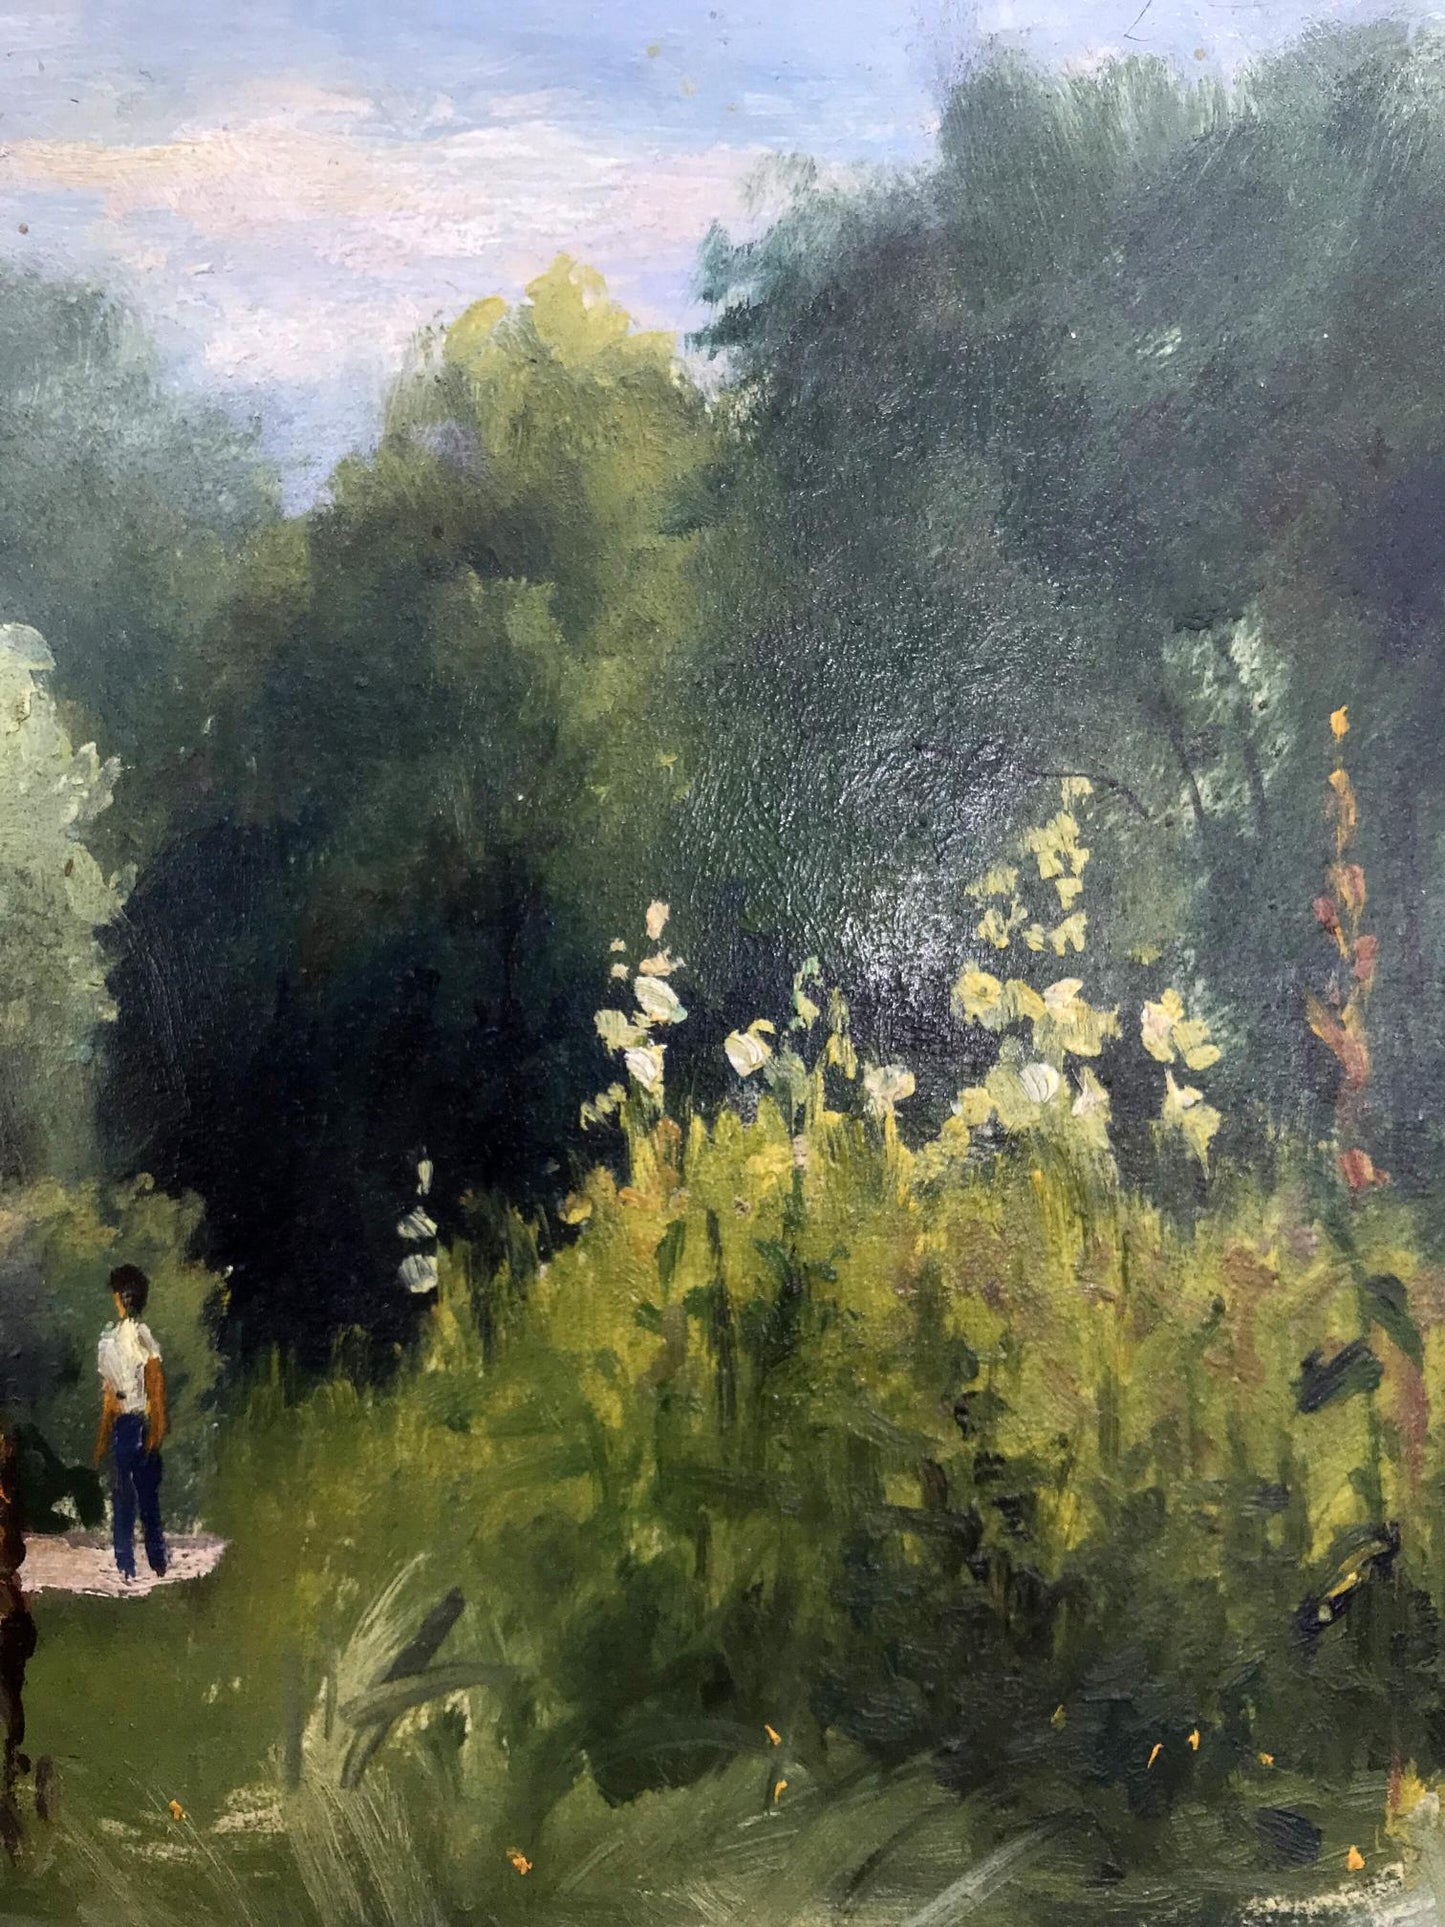 Oil artwork featuring a "Walk" by Boris Serdyuk